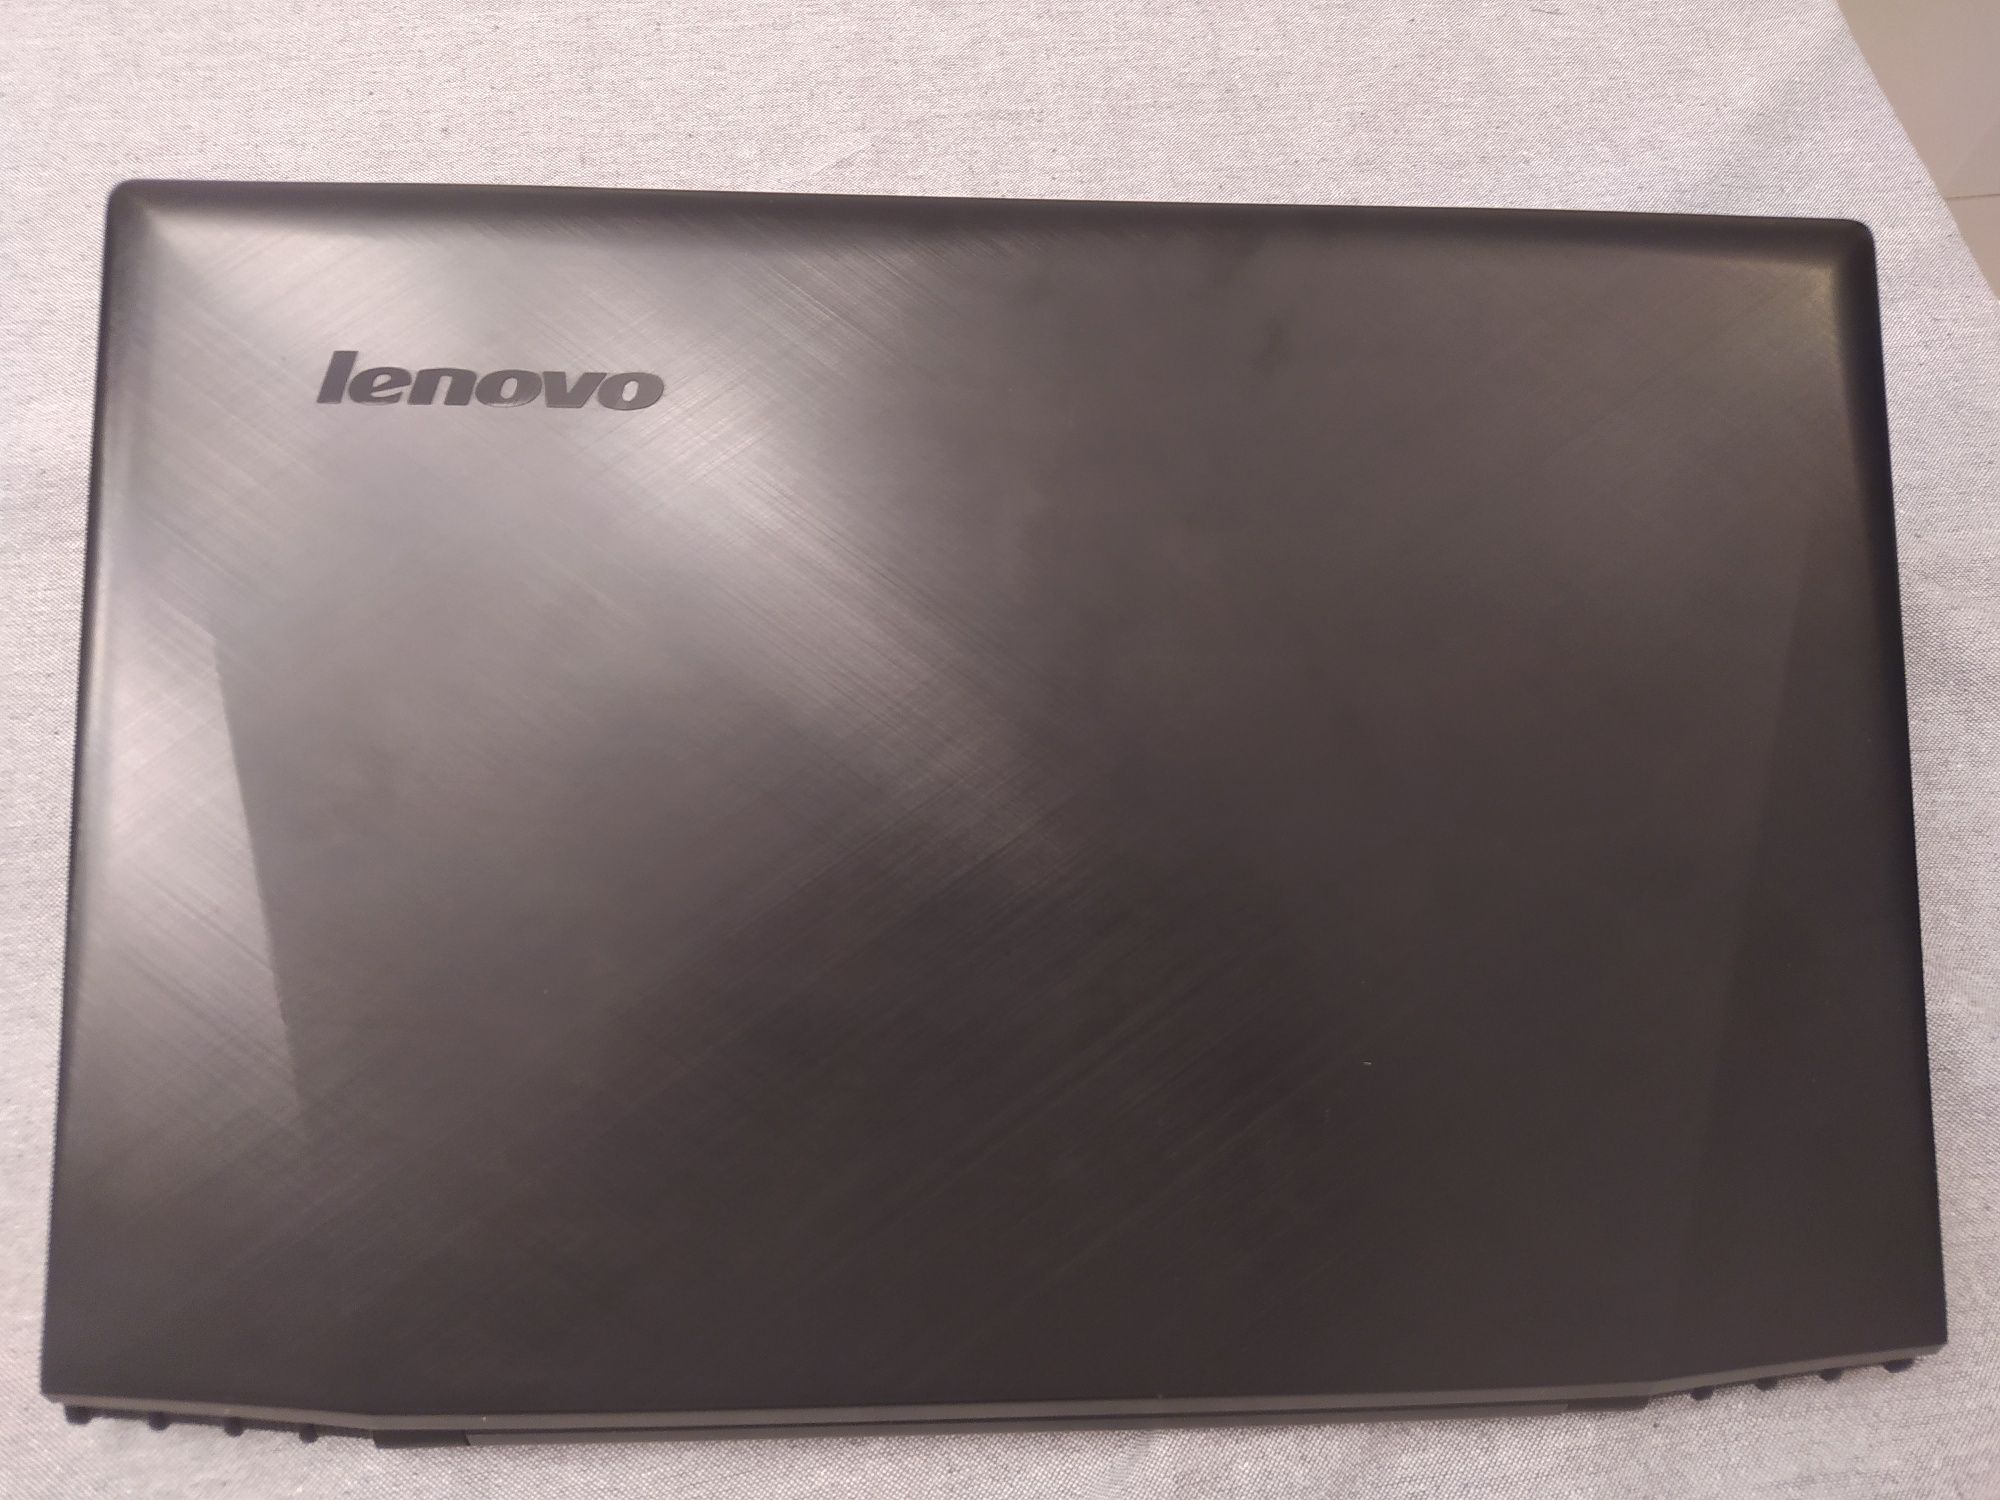 Laptop Lenovo Y50-70